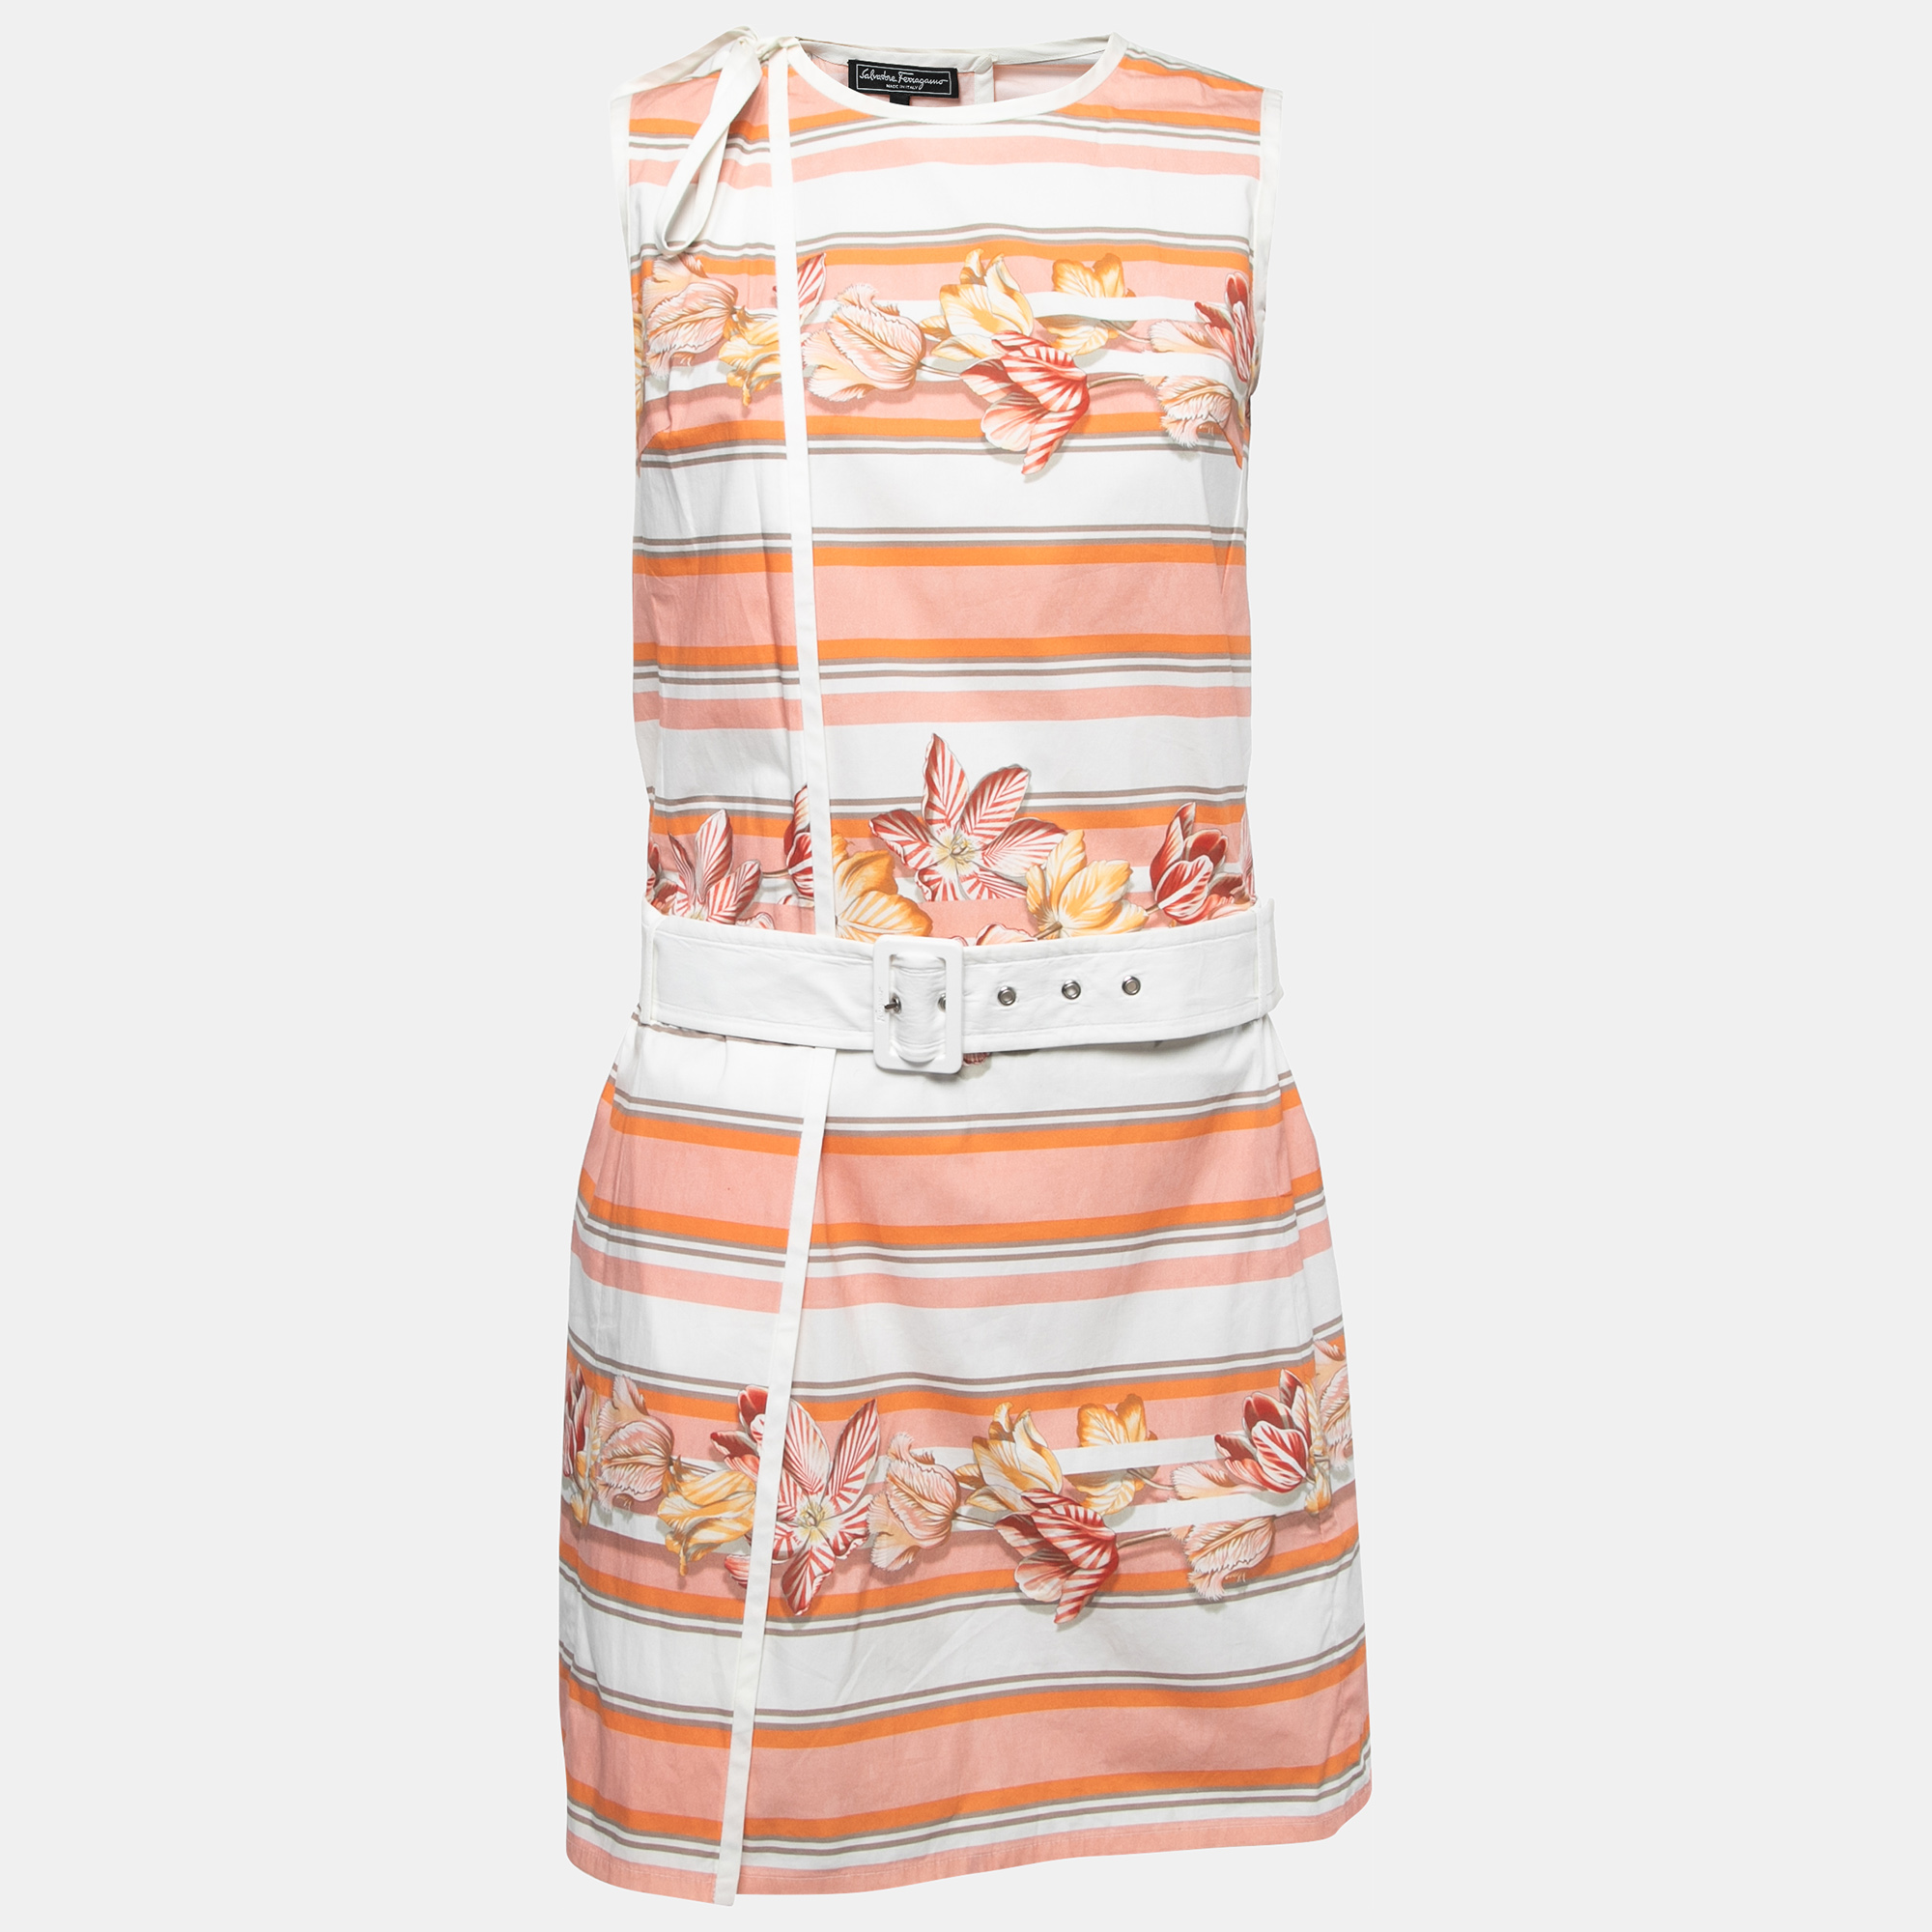 Salvatore Ferragamo Multicolor Printed Cotton Belted Shirt Dress S